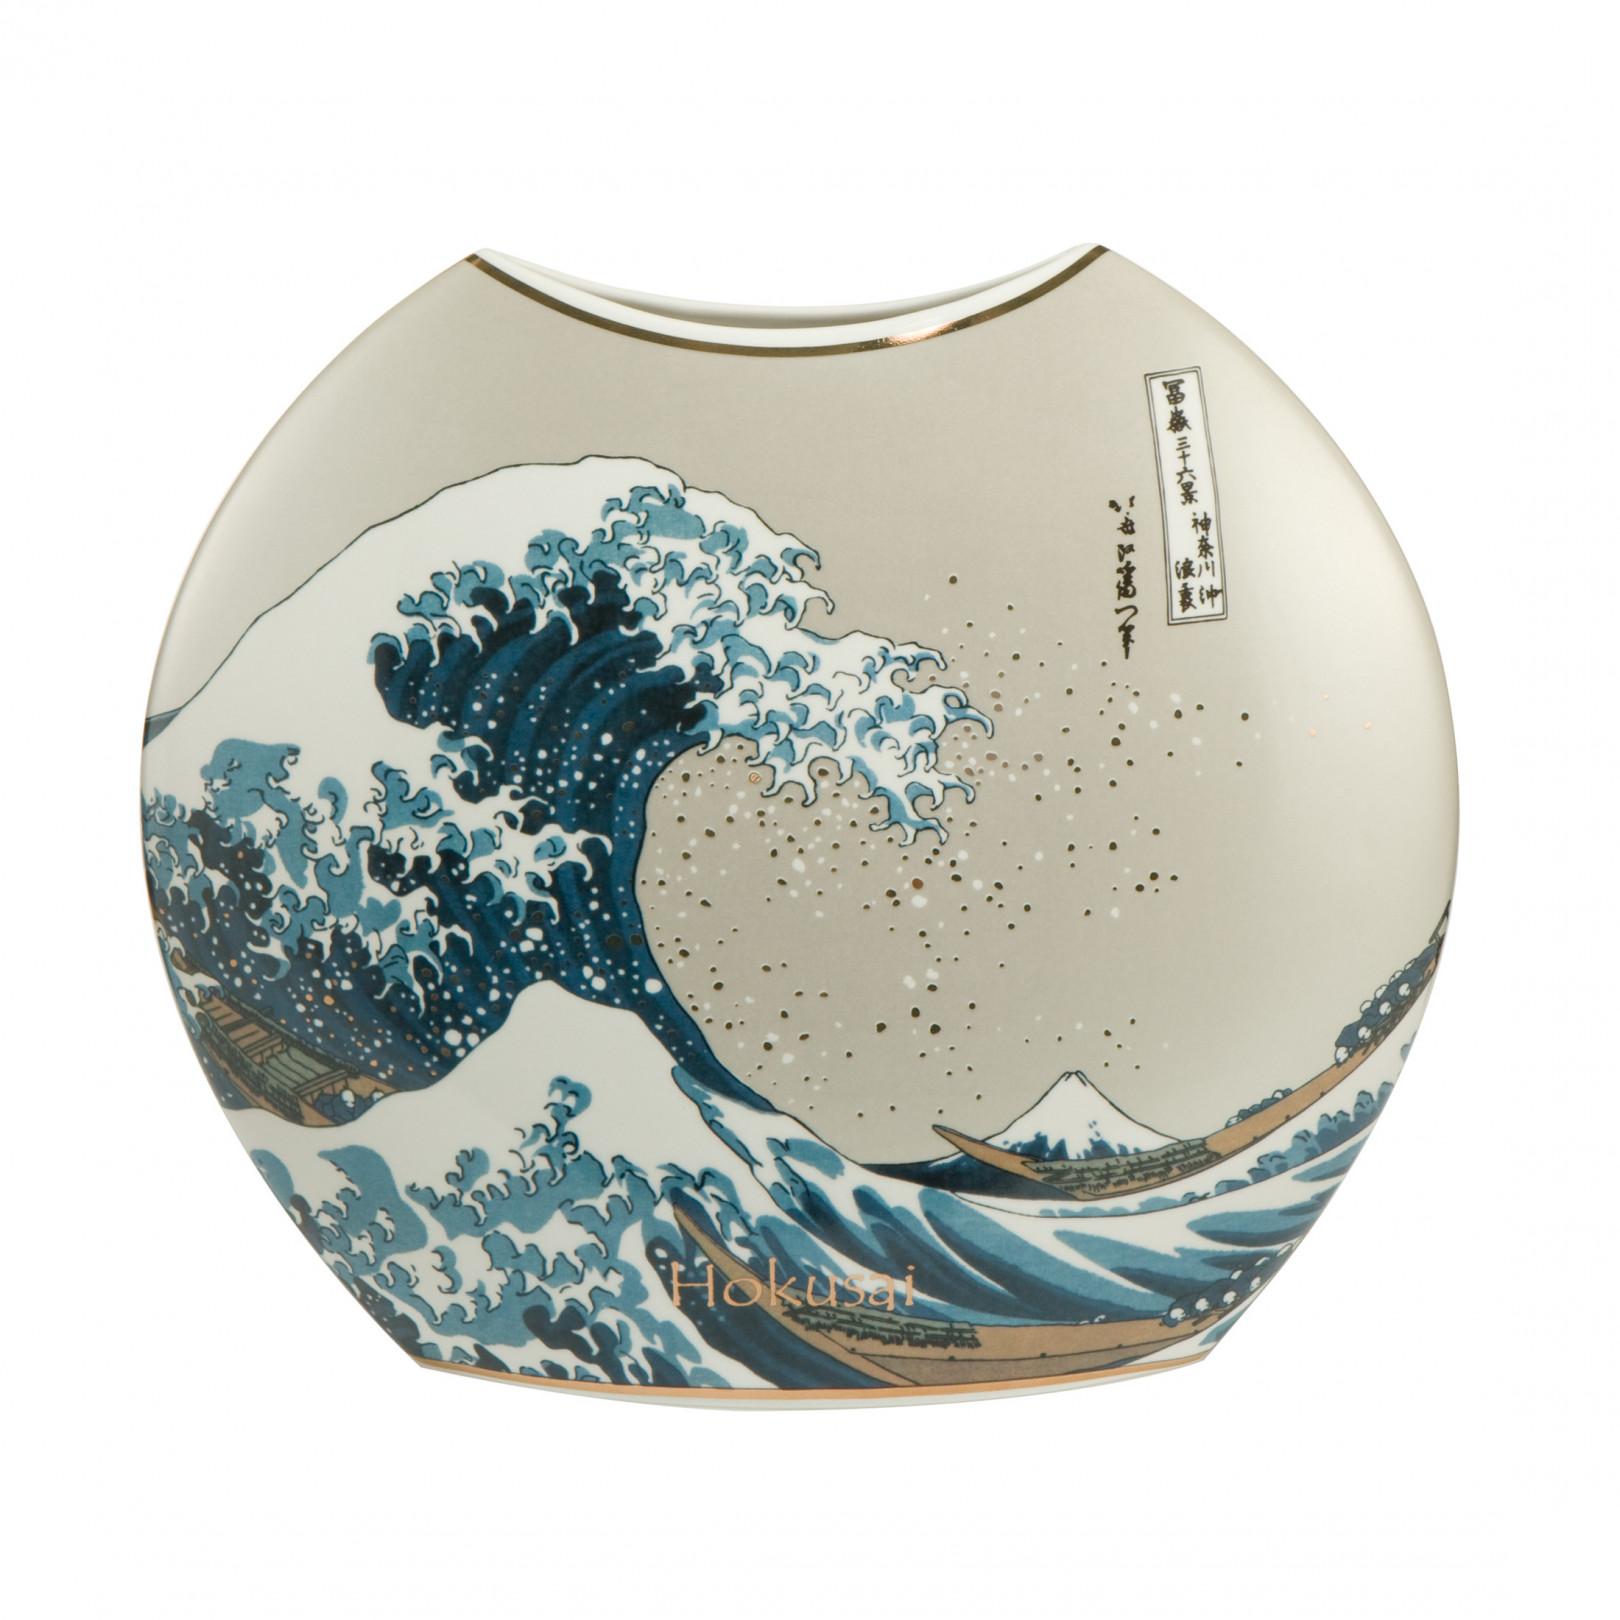 Wazon 30 cm K. Hokusai - Wielka fala  - Goebel